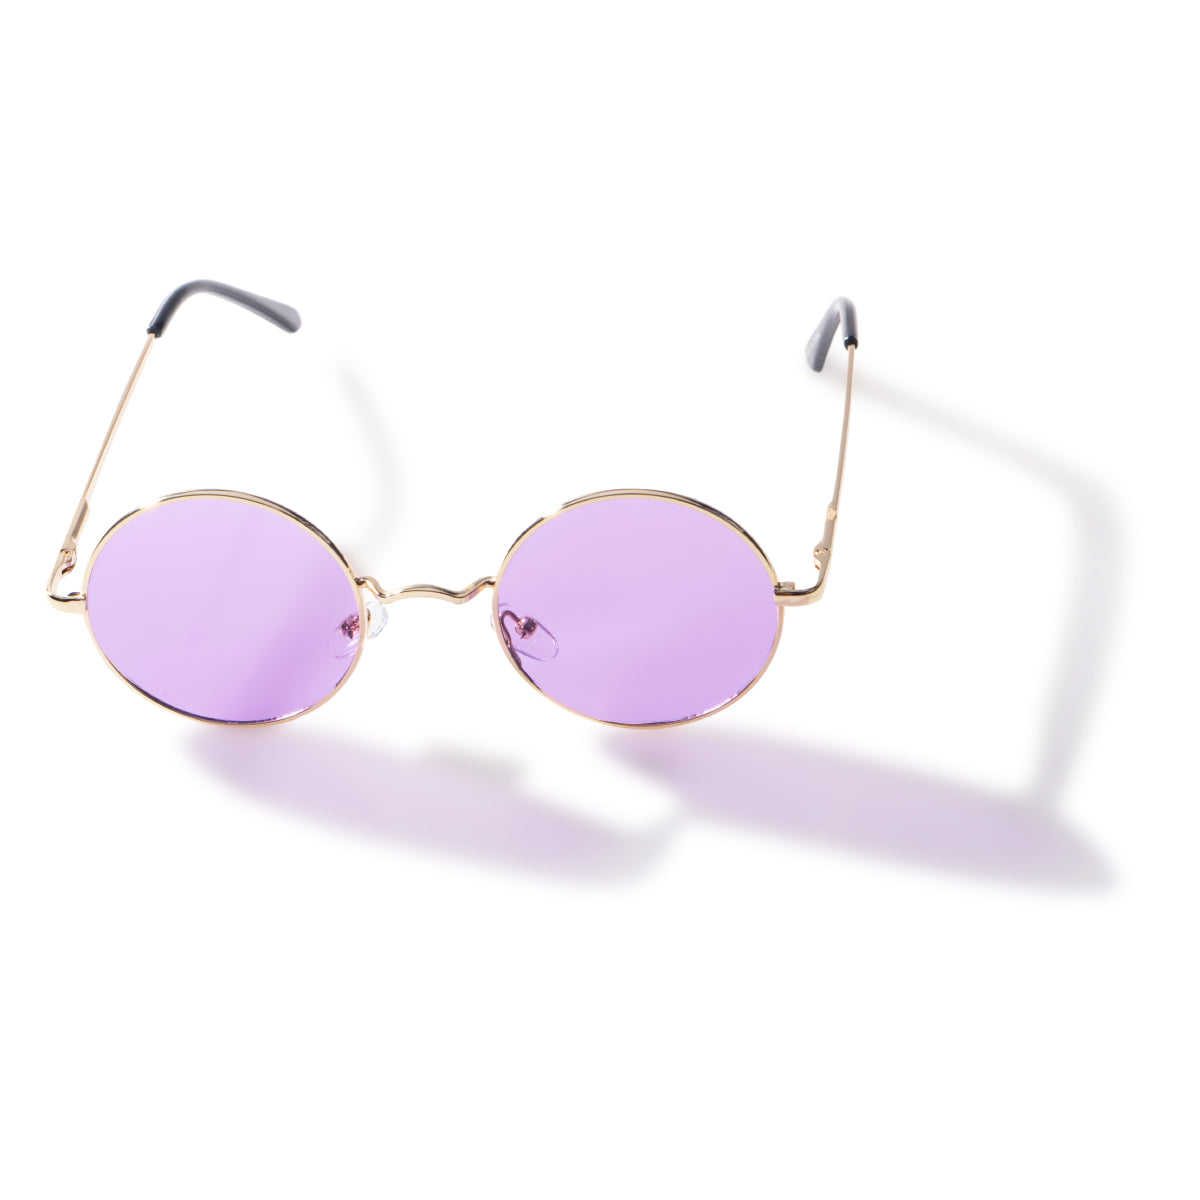 John Lennon Vintage Round Sunglasses Costume Accessory - Purple